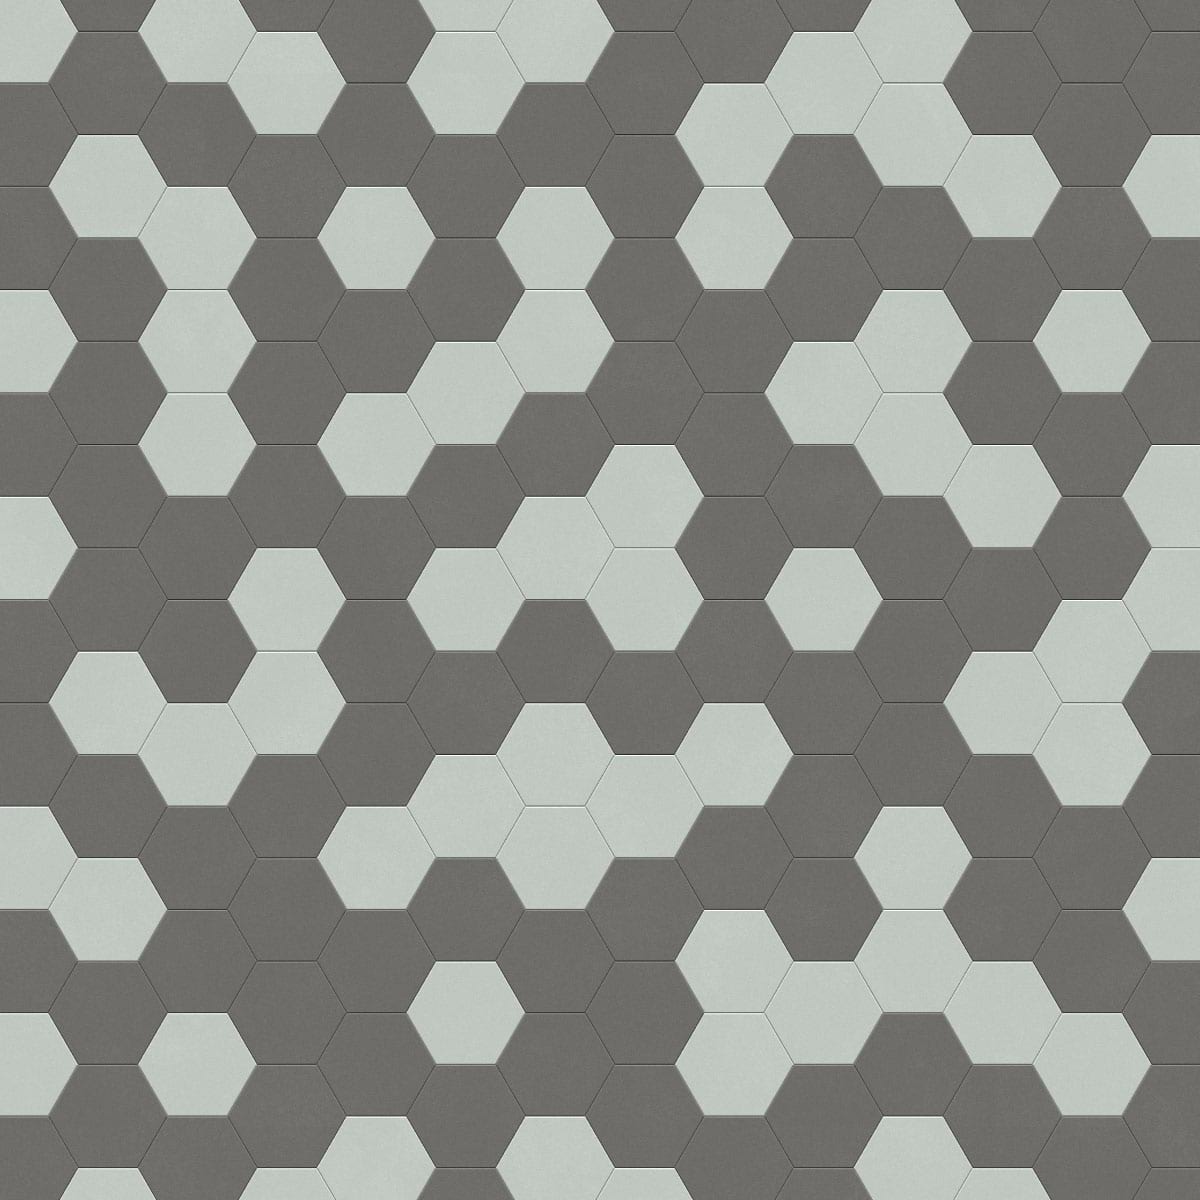 Виниловый пол Moduleo Moods Hexagon 338 от flatbox.by